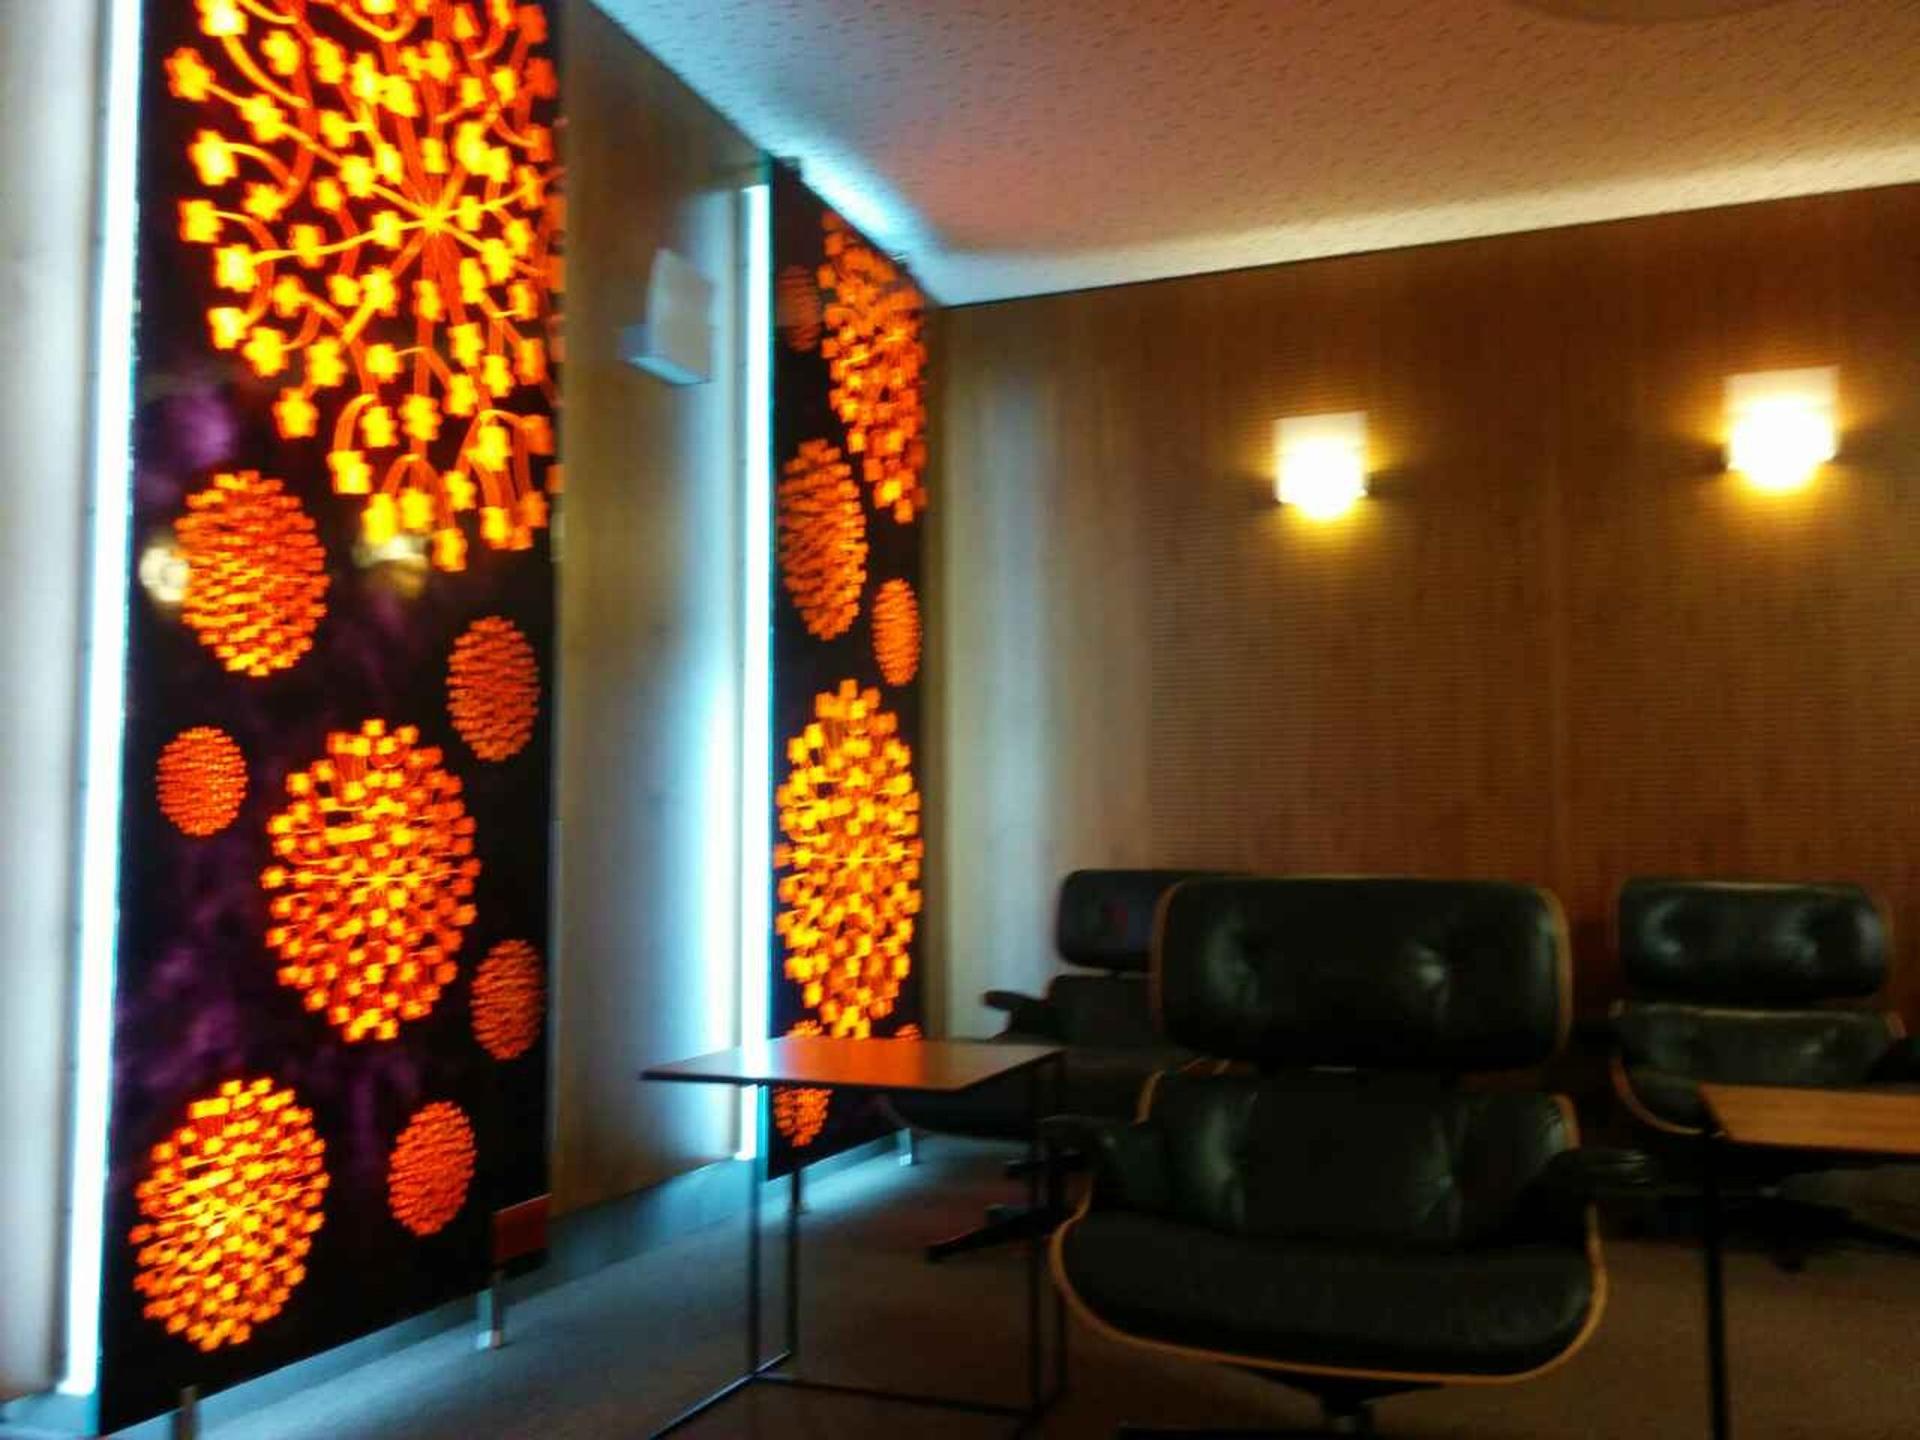 Executive Lounge image 12 of 18